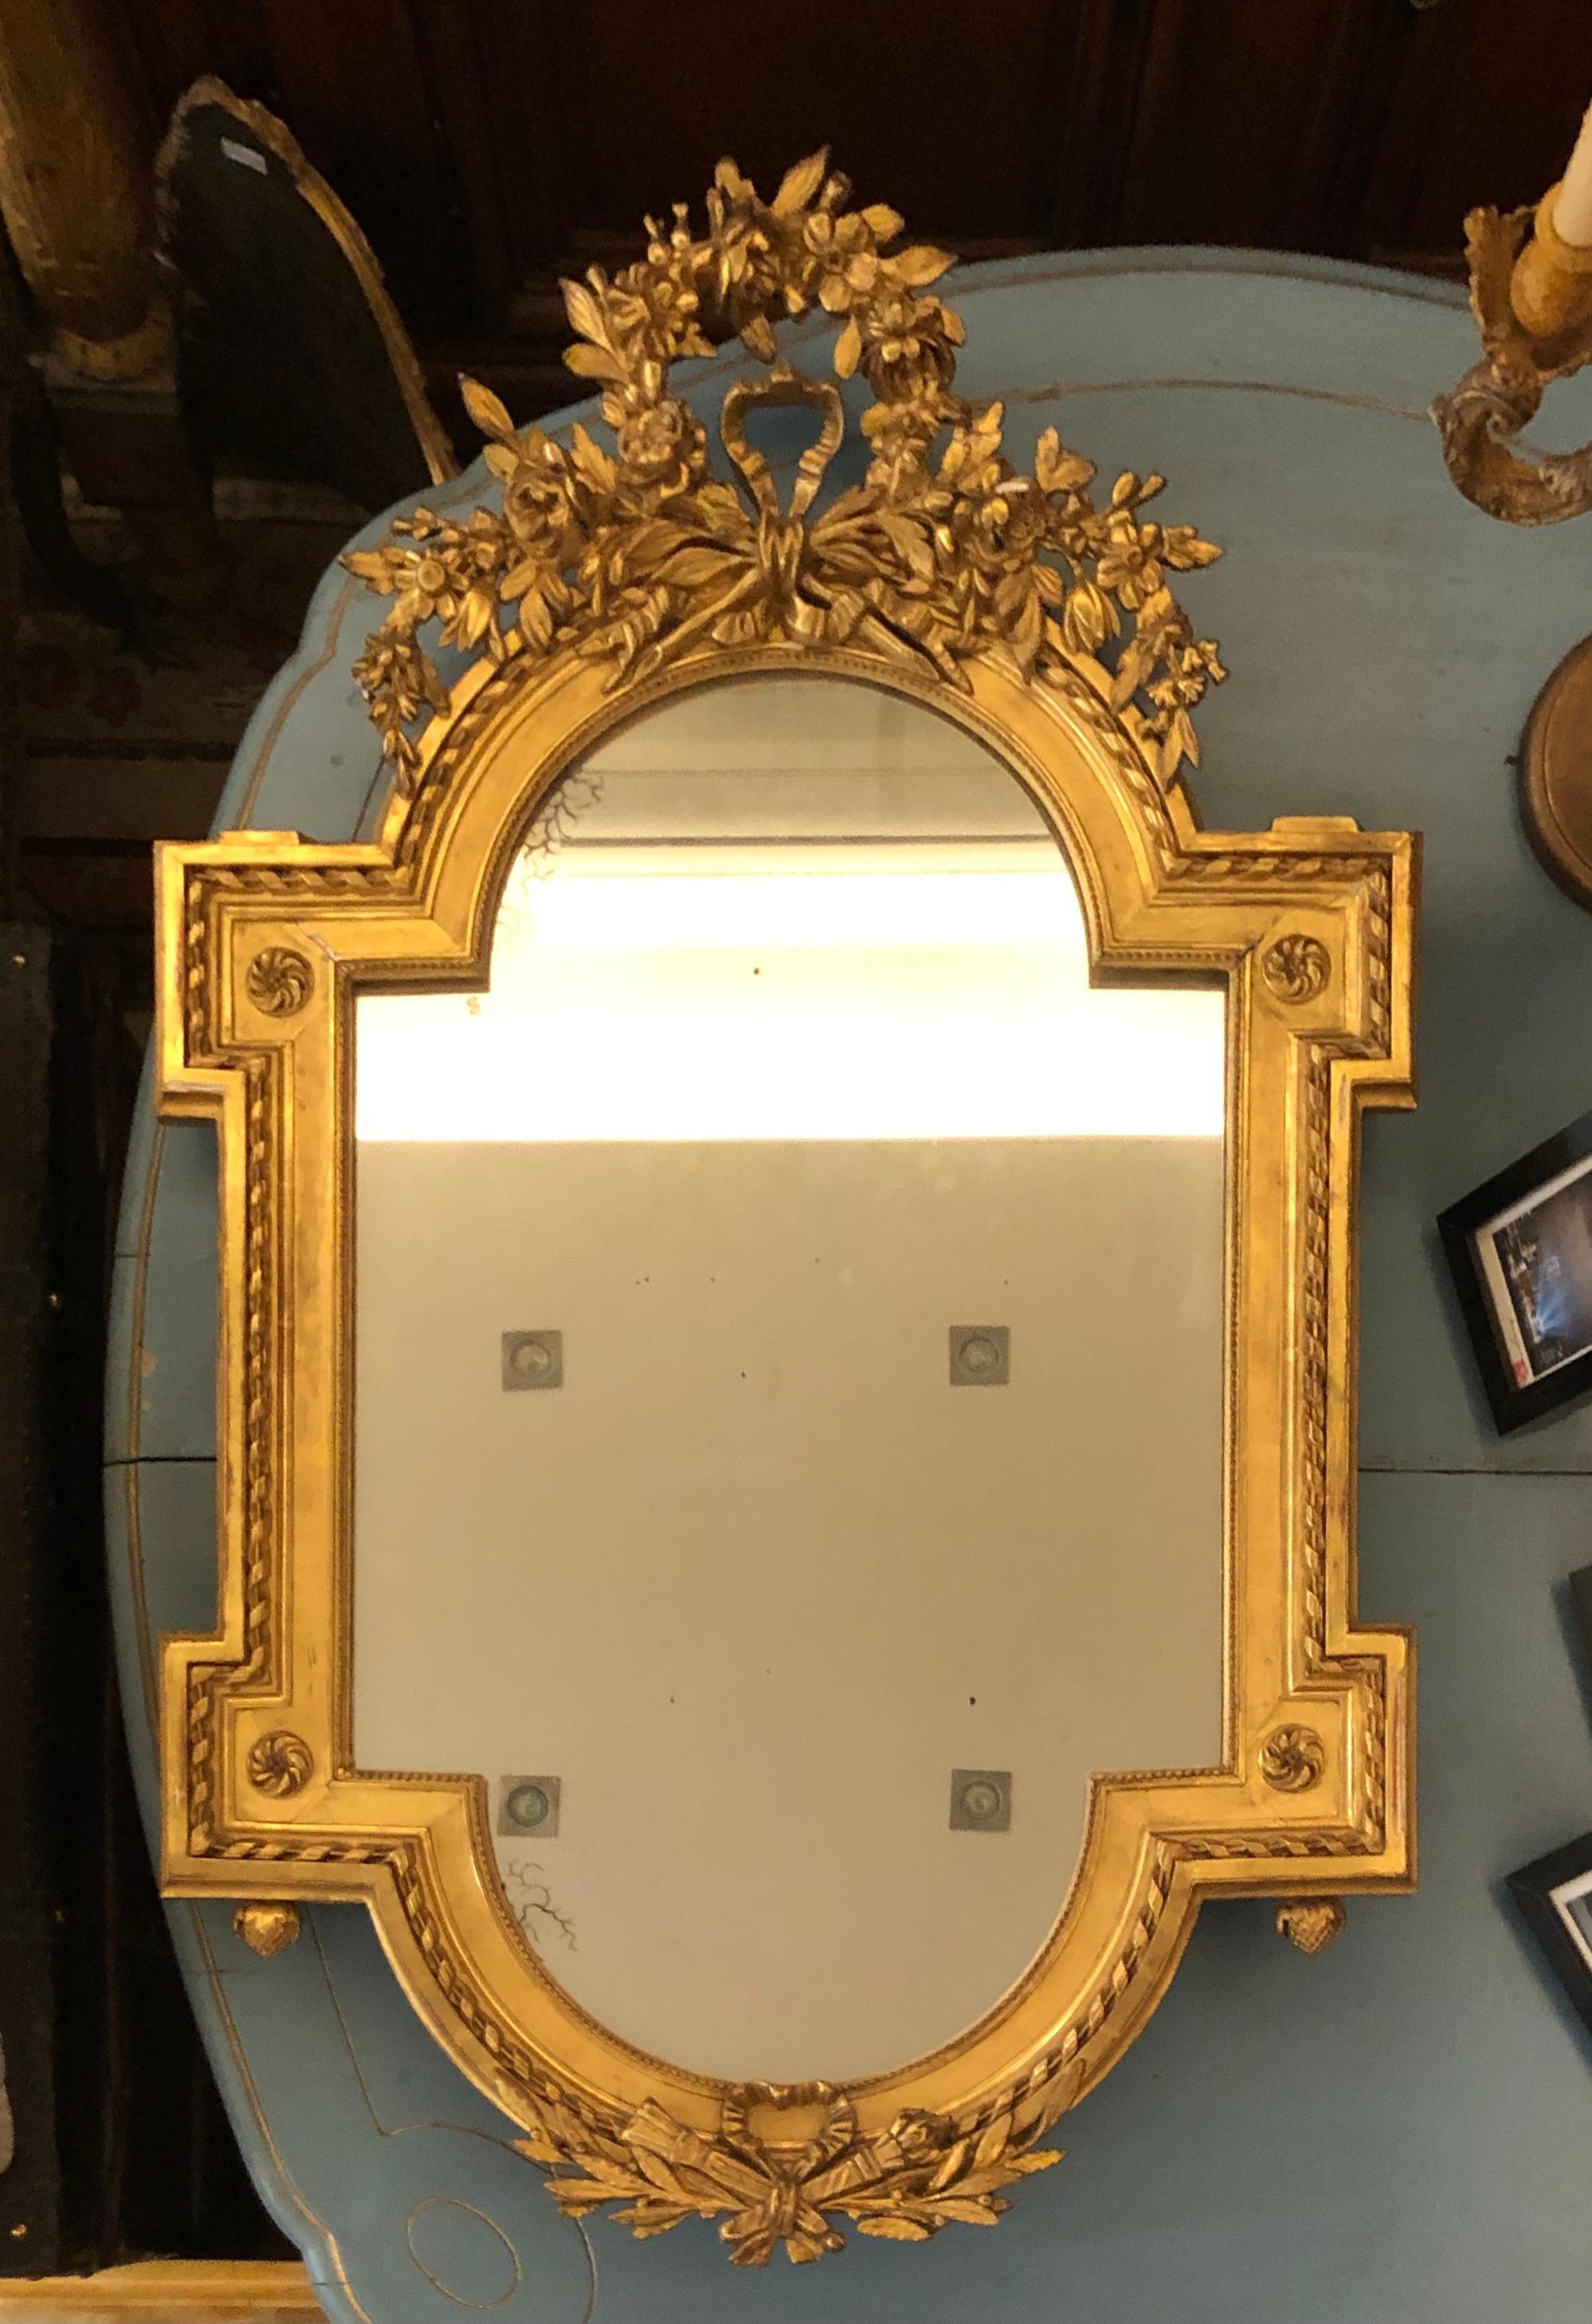 19th century French gilt wood miroir signed by Bertrand Montluçon, Louis XVI
France, circa 1870
107/67 ??.